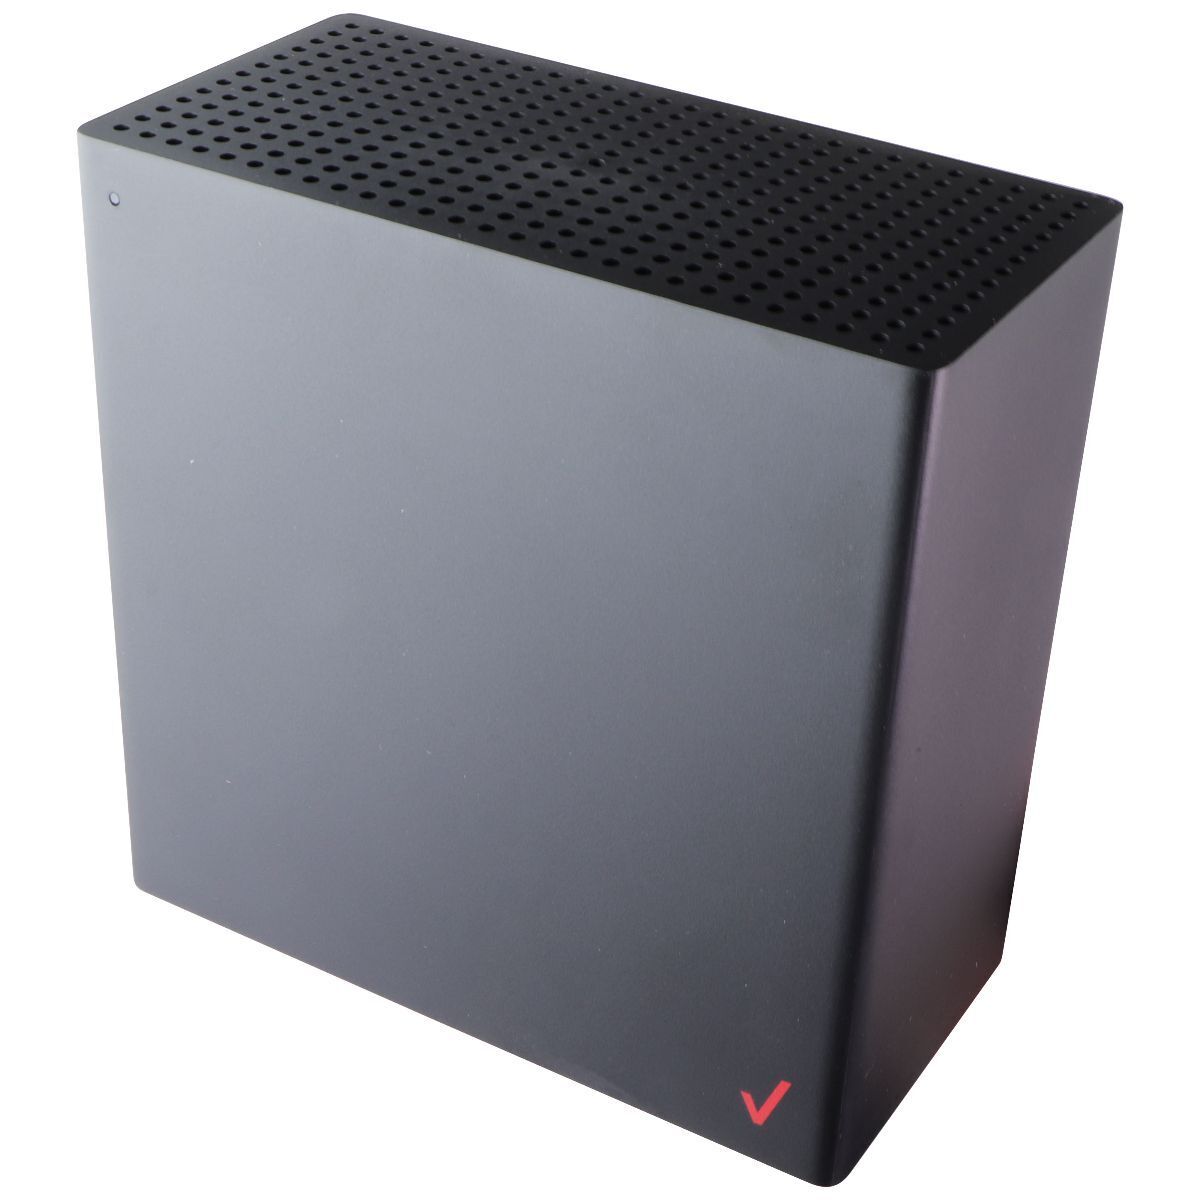 Verizon Business Internet Gateway Router (4 LAN Ports) - Black (FSNO21VA)